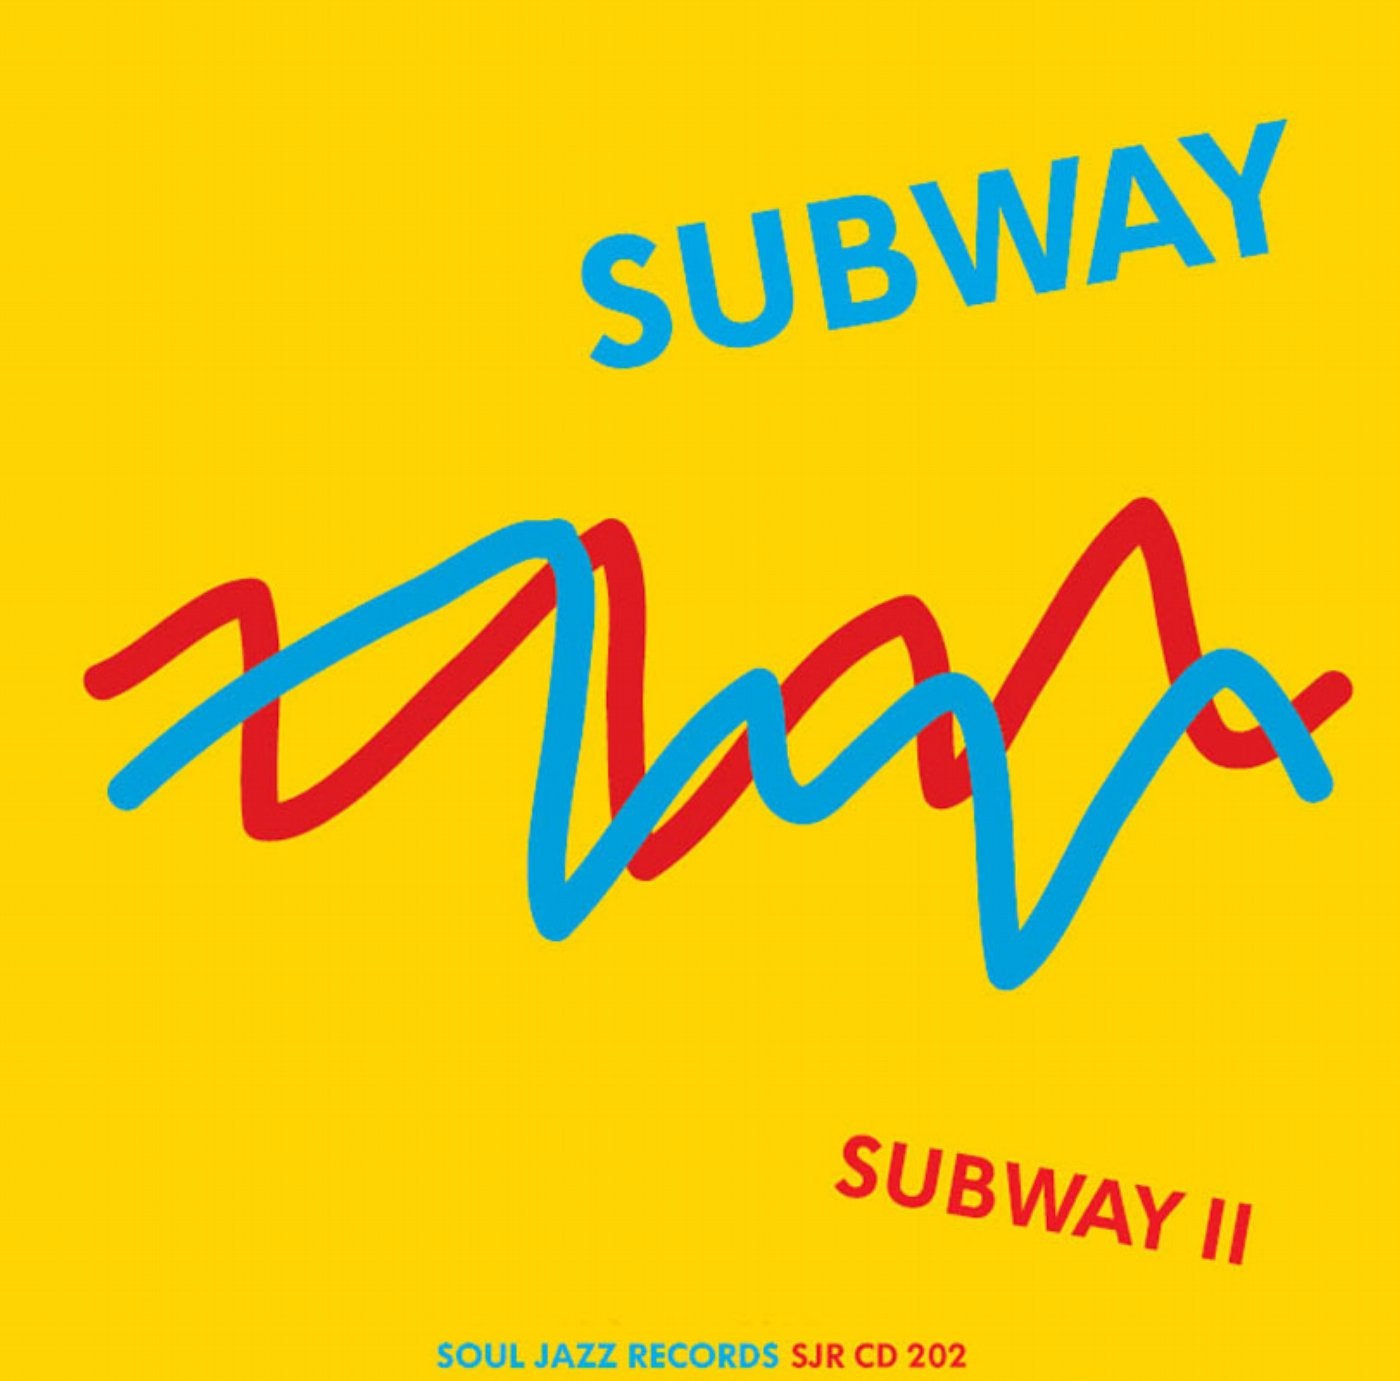 Subway II